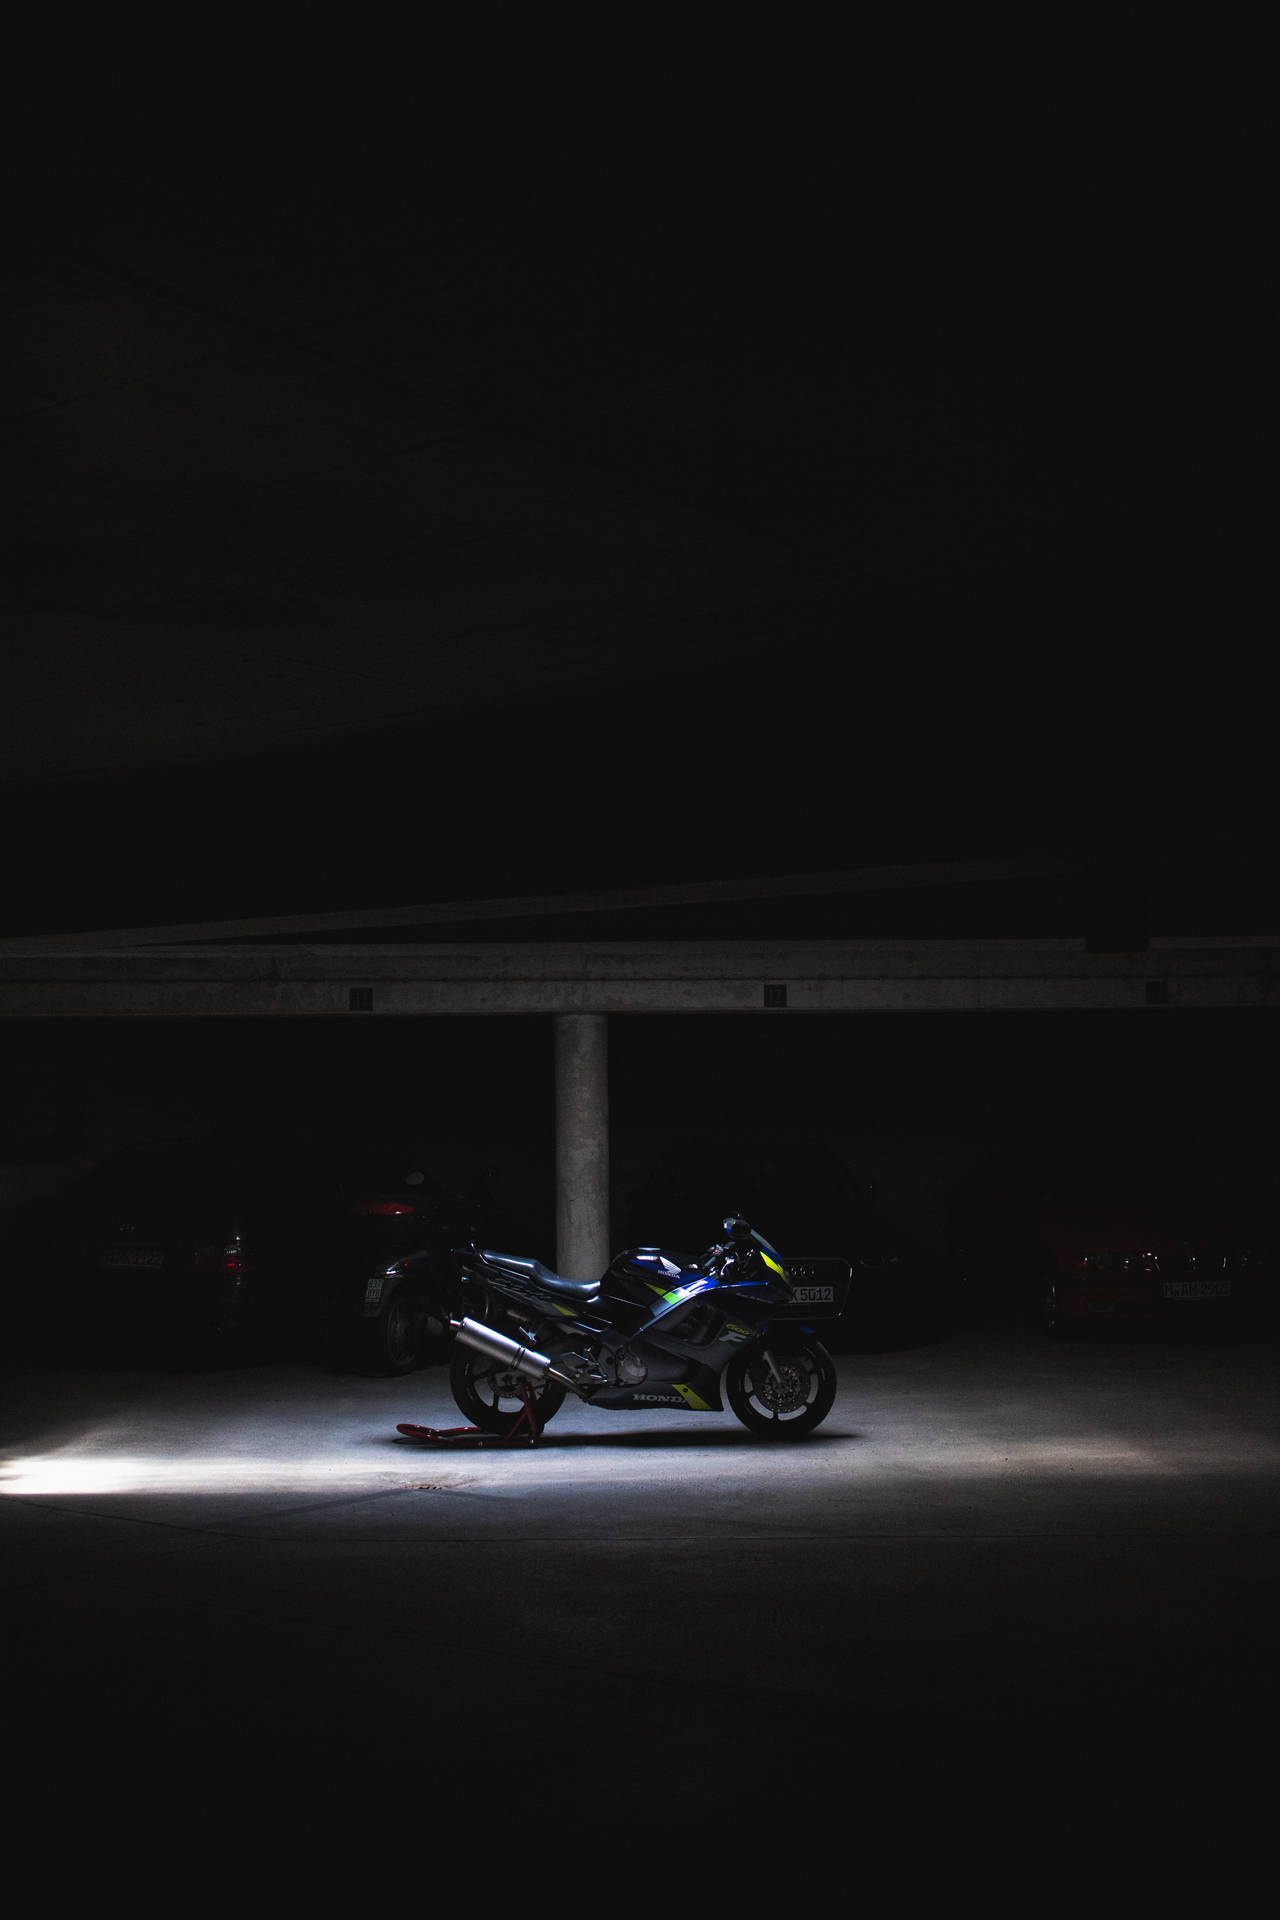 Motorcycle 3680X5520 wallpaper